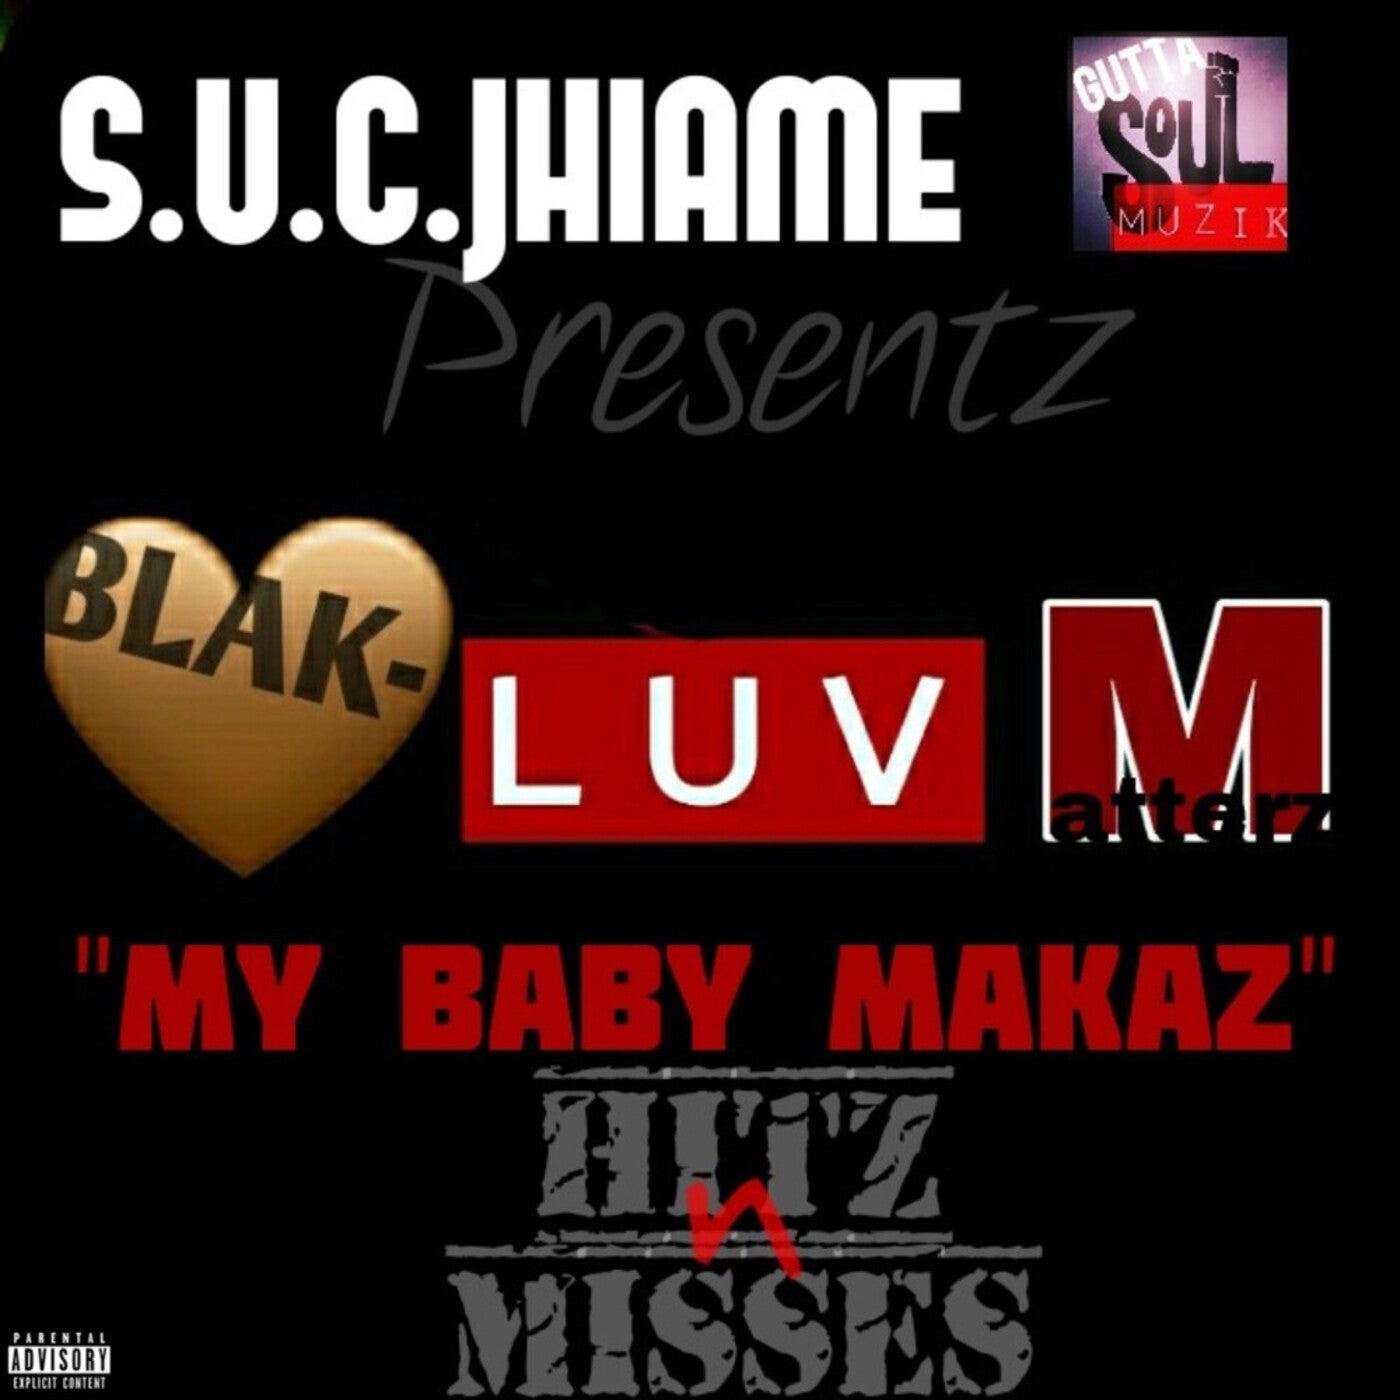 Blak-Luv Matterz ("My Baby Makaz" Hitz n Misses)